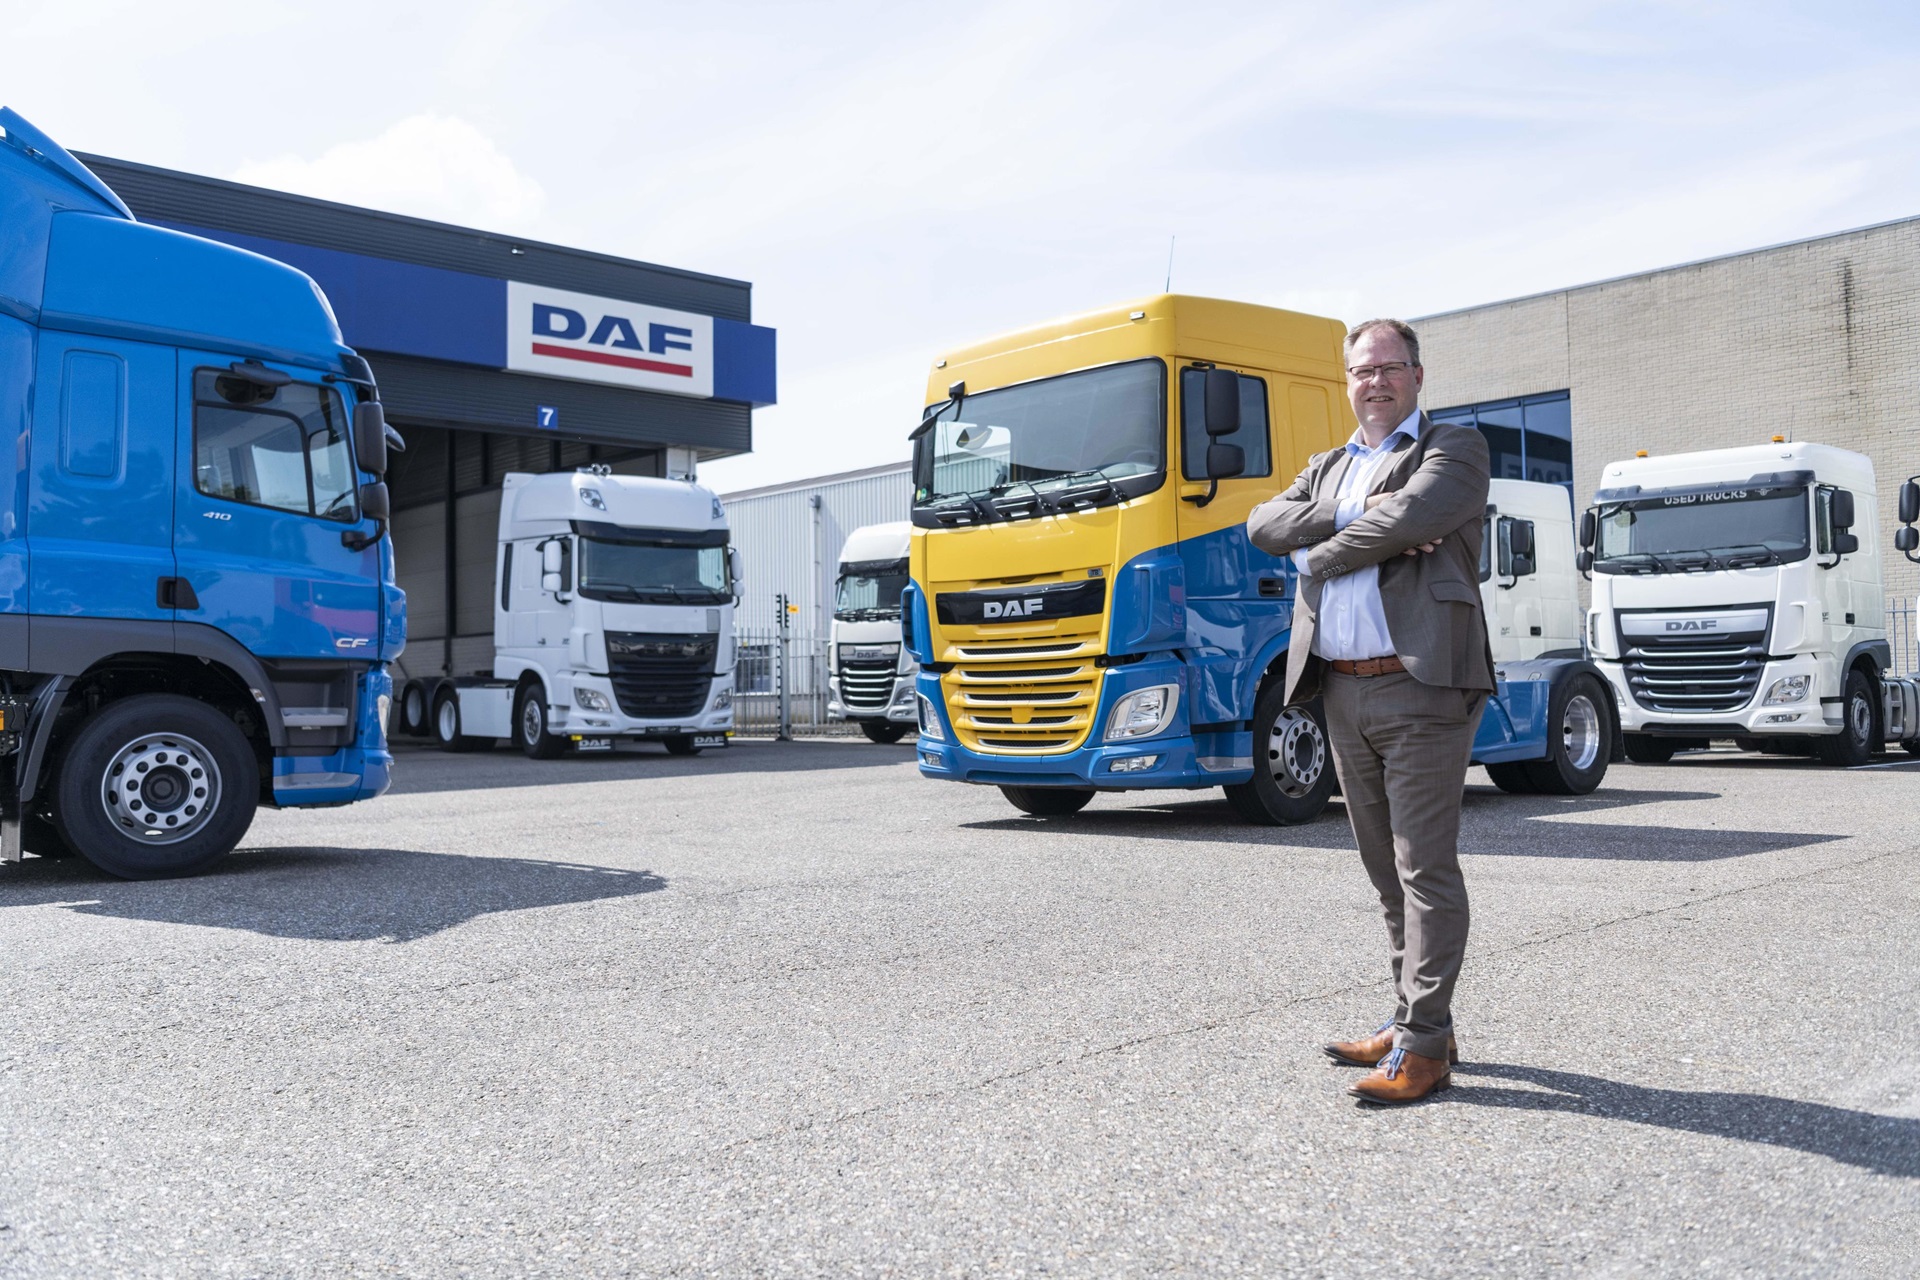 Daf truck - .de